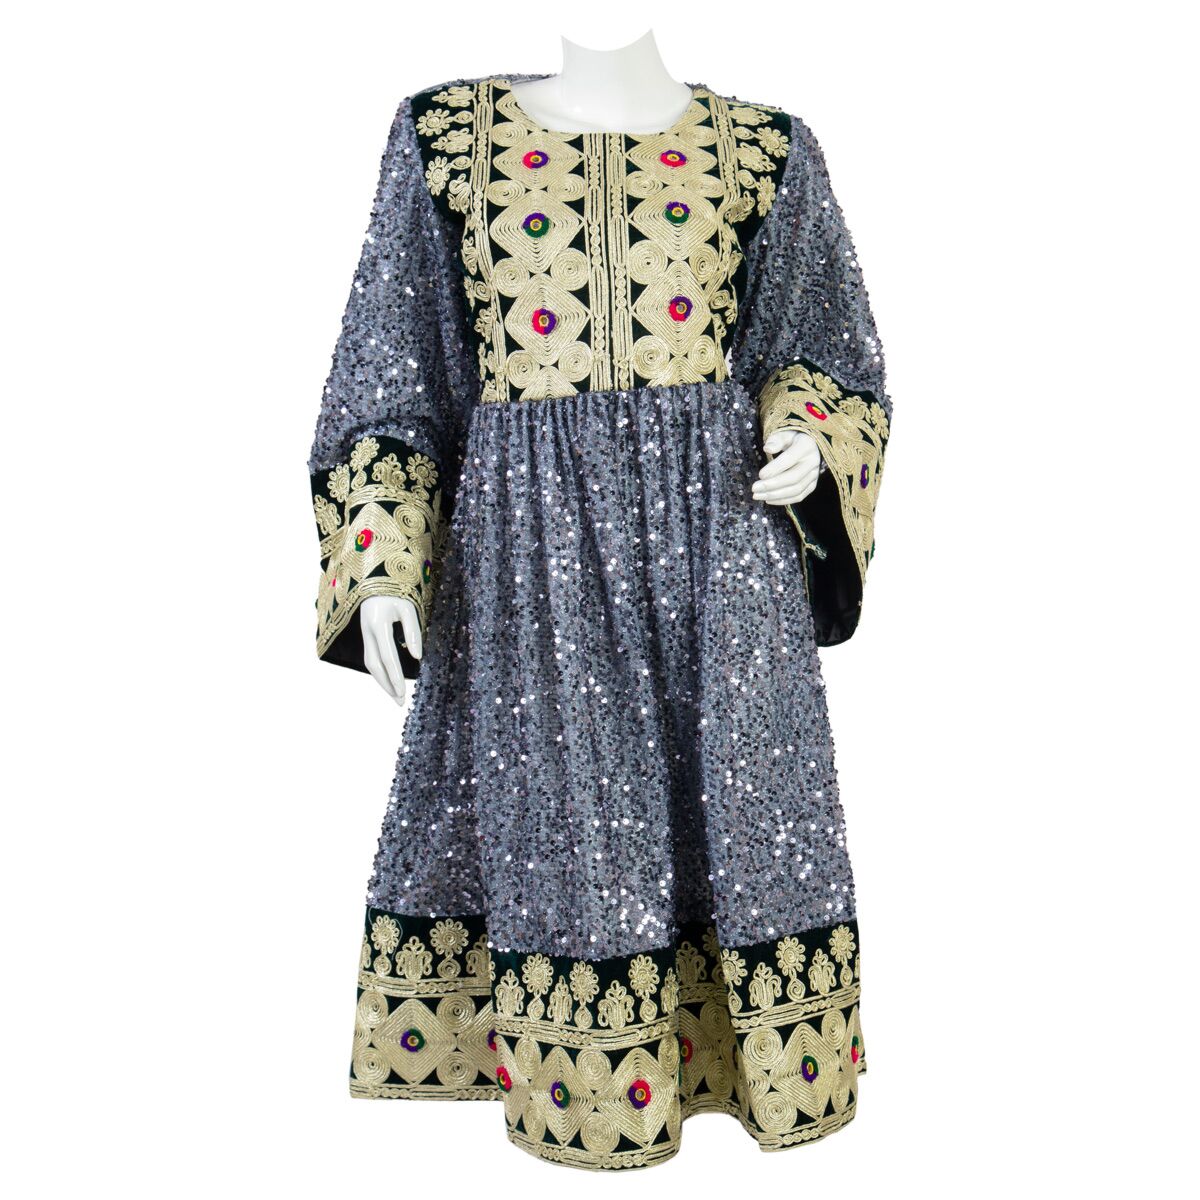 Gande Afghani with White Chermaduzi| Afghani Dress with Chermaduzi on Sleeves/Chest/Skirt Lining 